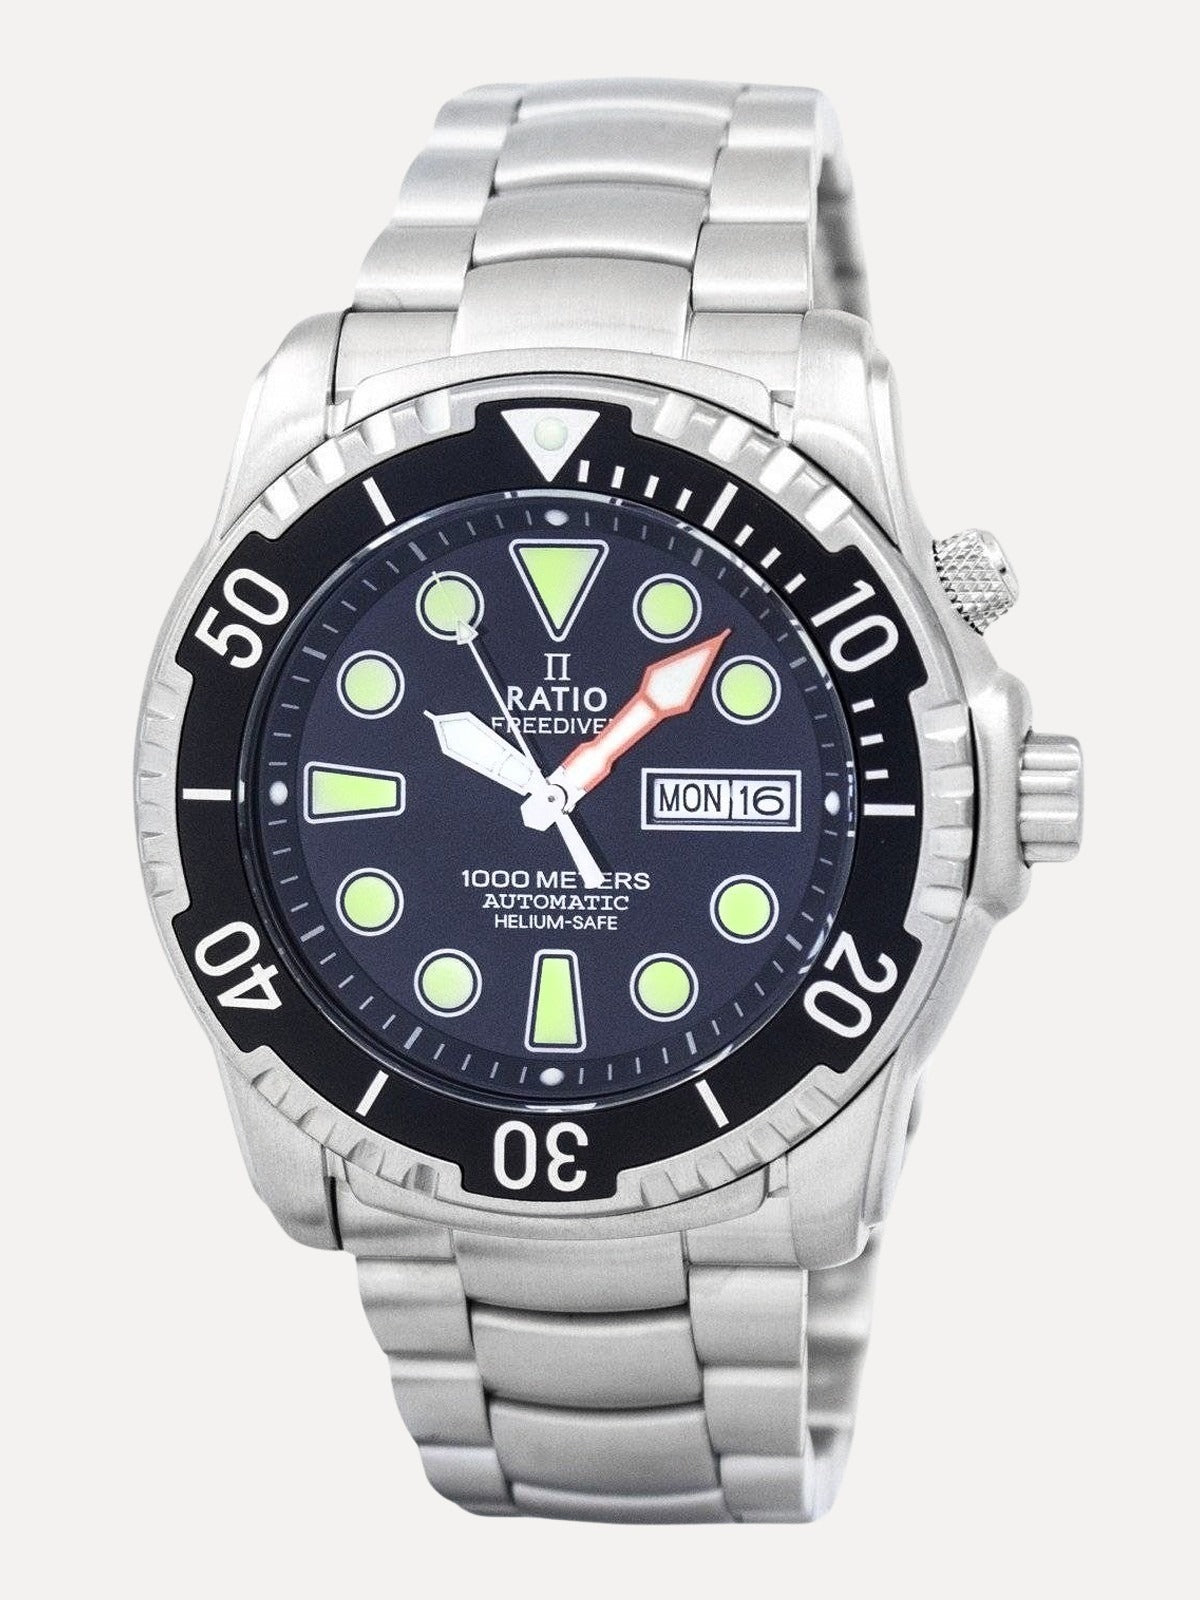 Ratio Free Diver Helium-Safe 1000M Automatic 1068HA96-34VA-00 Men's Watch